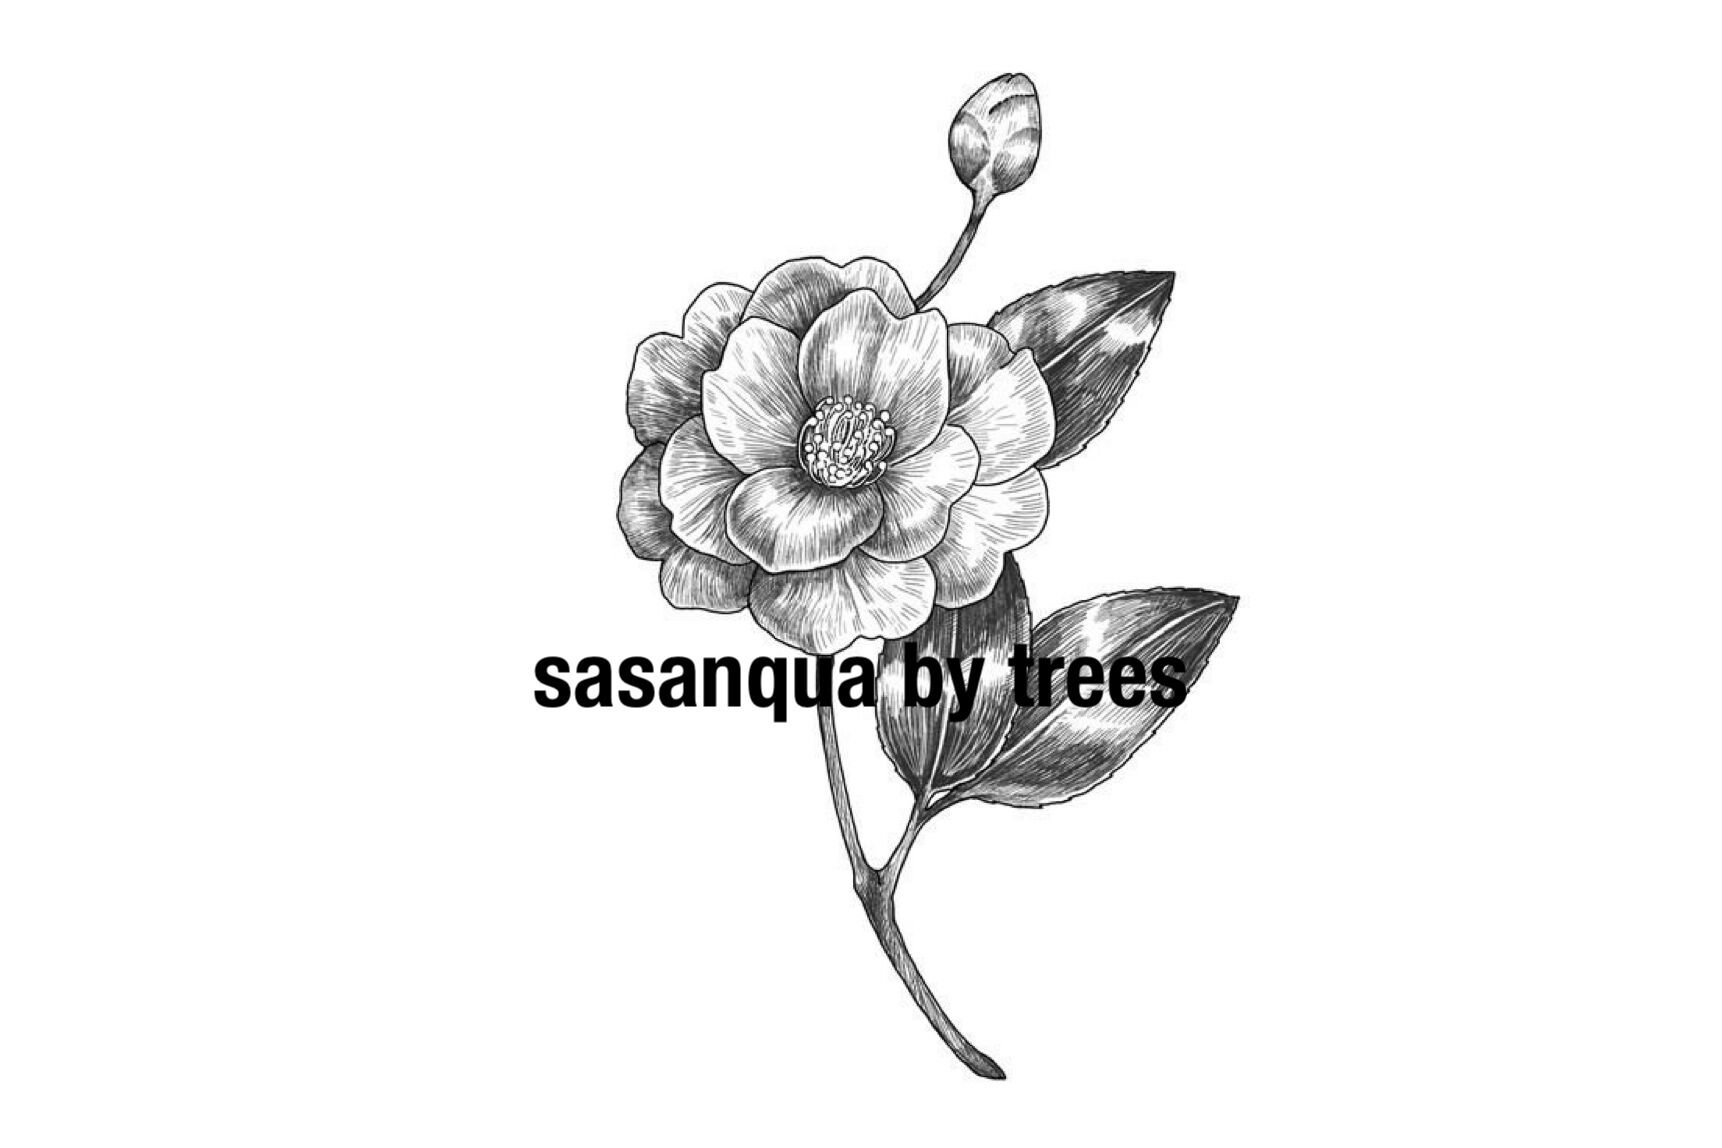 sasanqua by trees / サザンカバイツリーズ